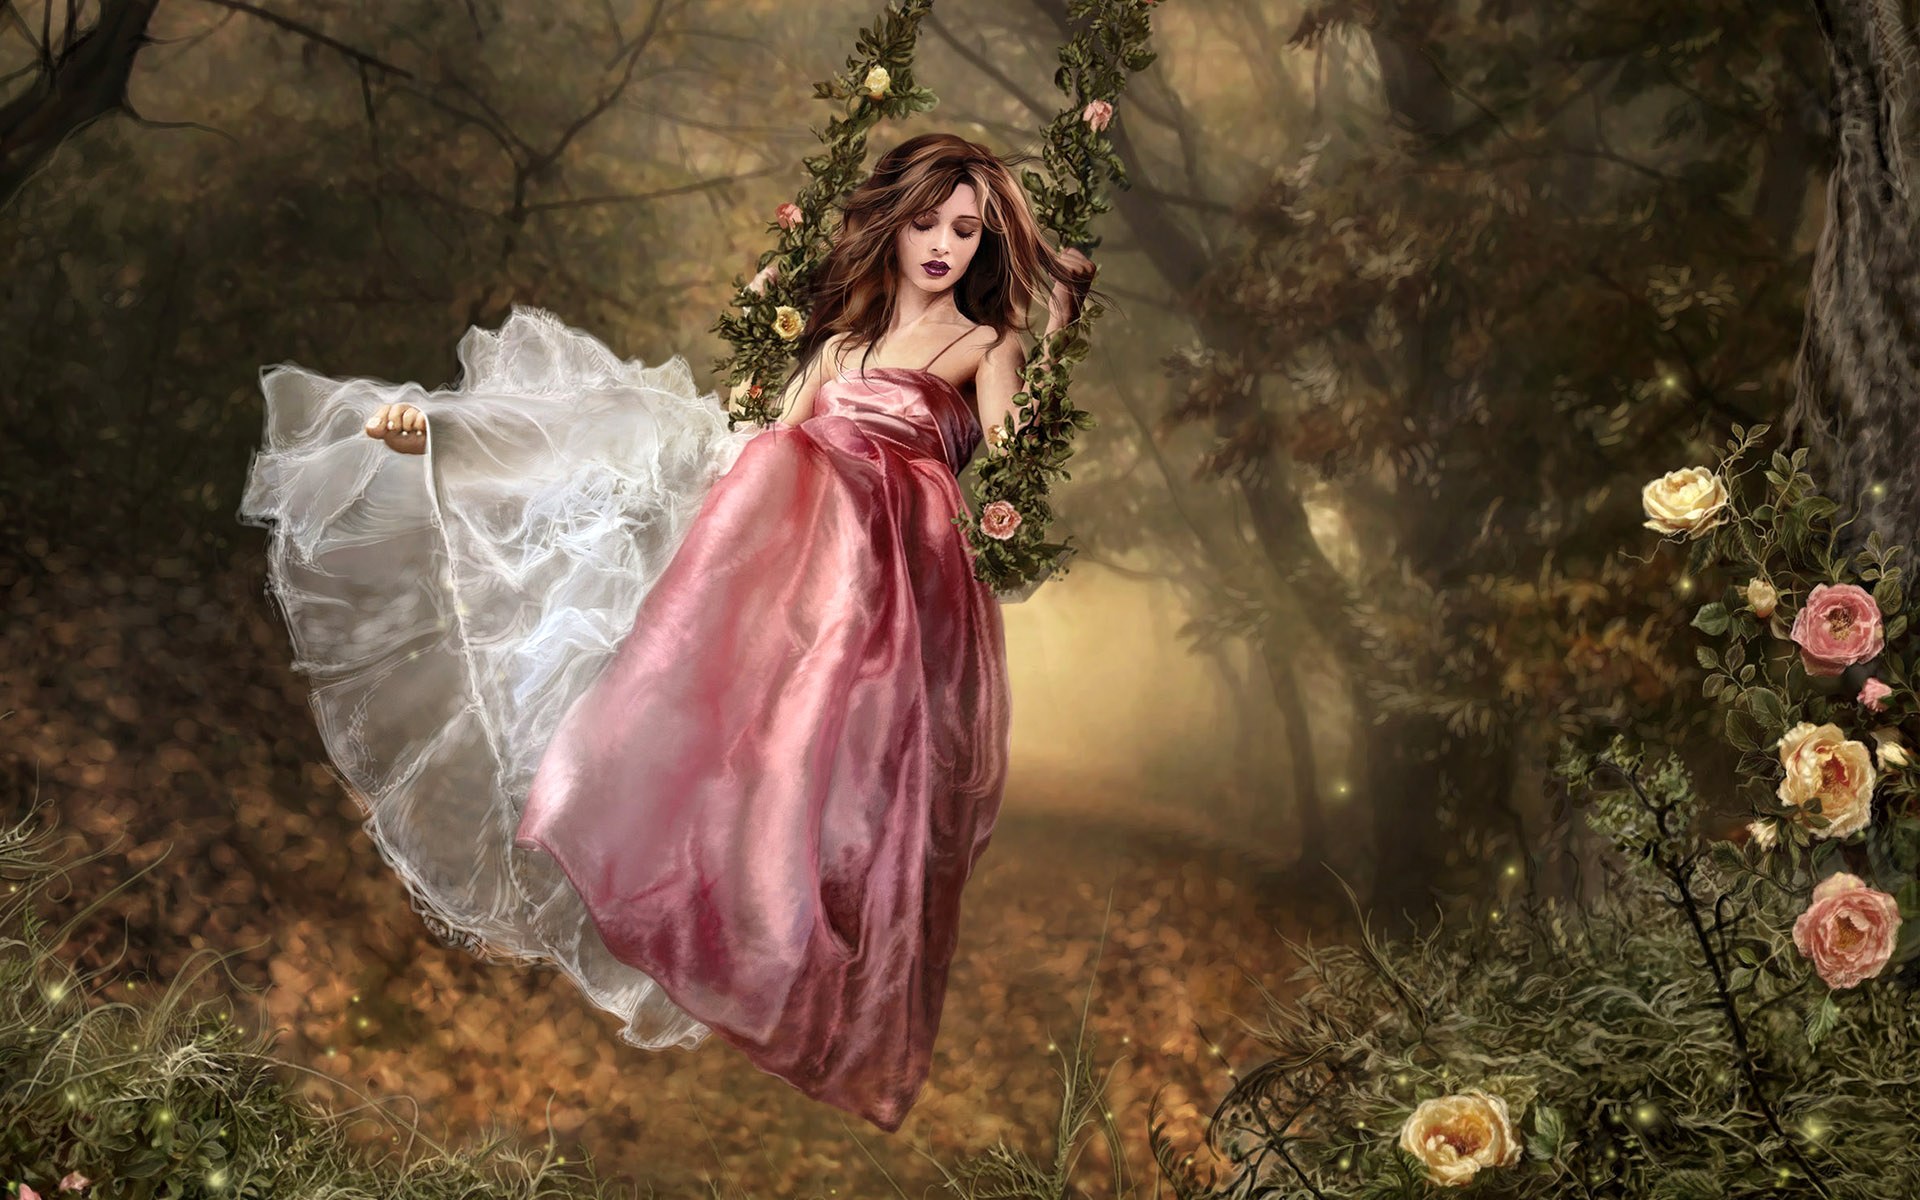 Fantasy Woman in Lovely Dress Swinging on a Rose Vine Swing